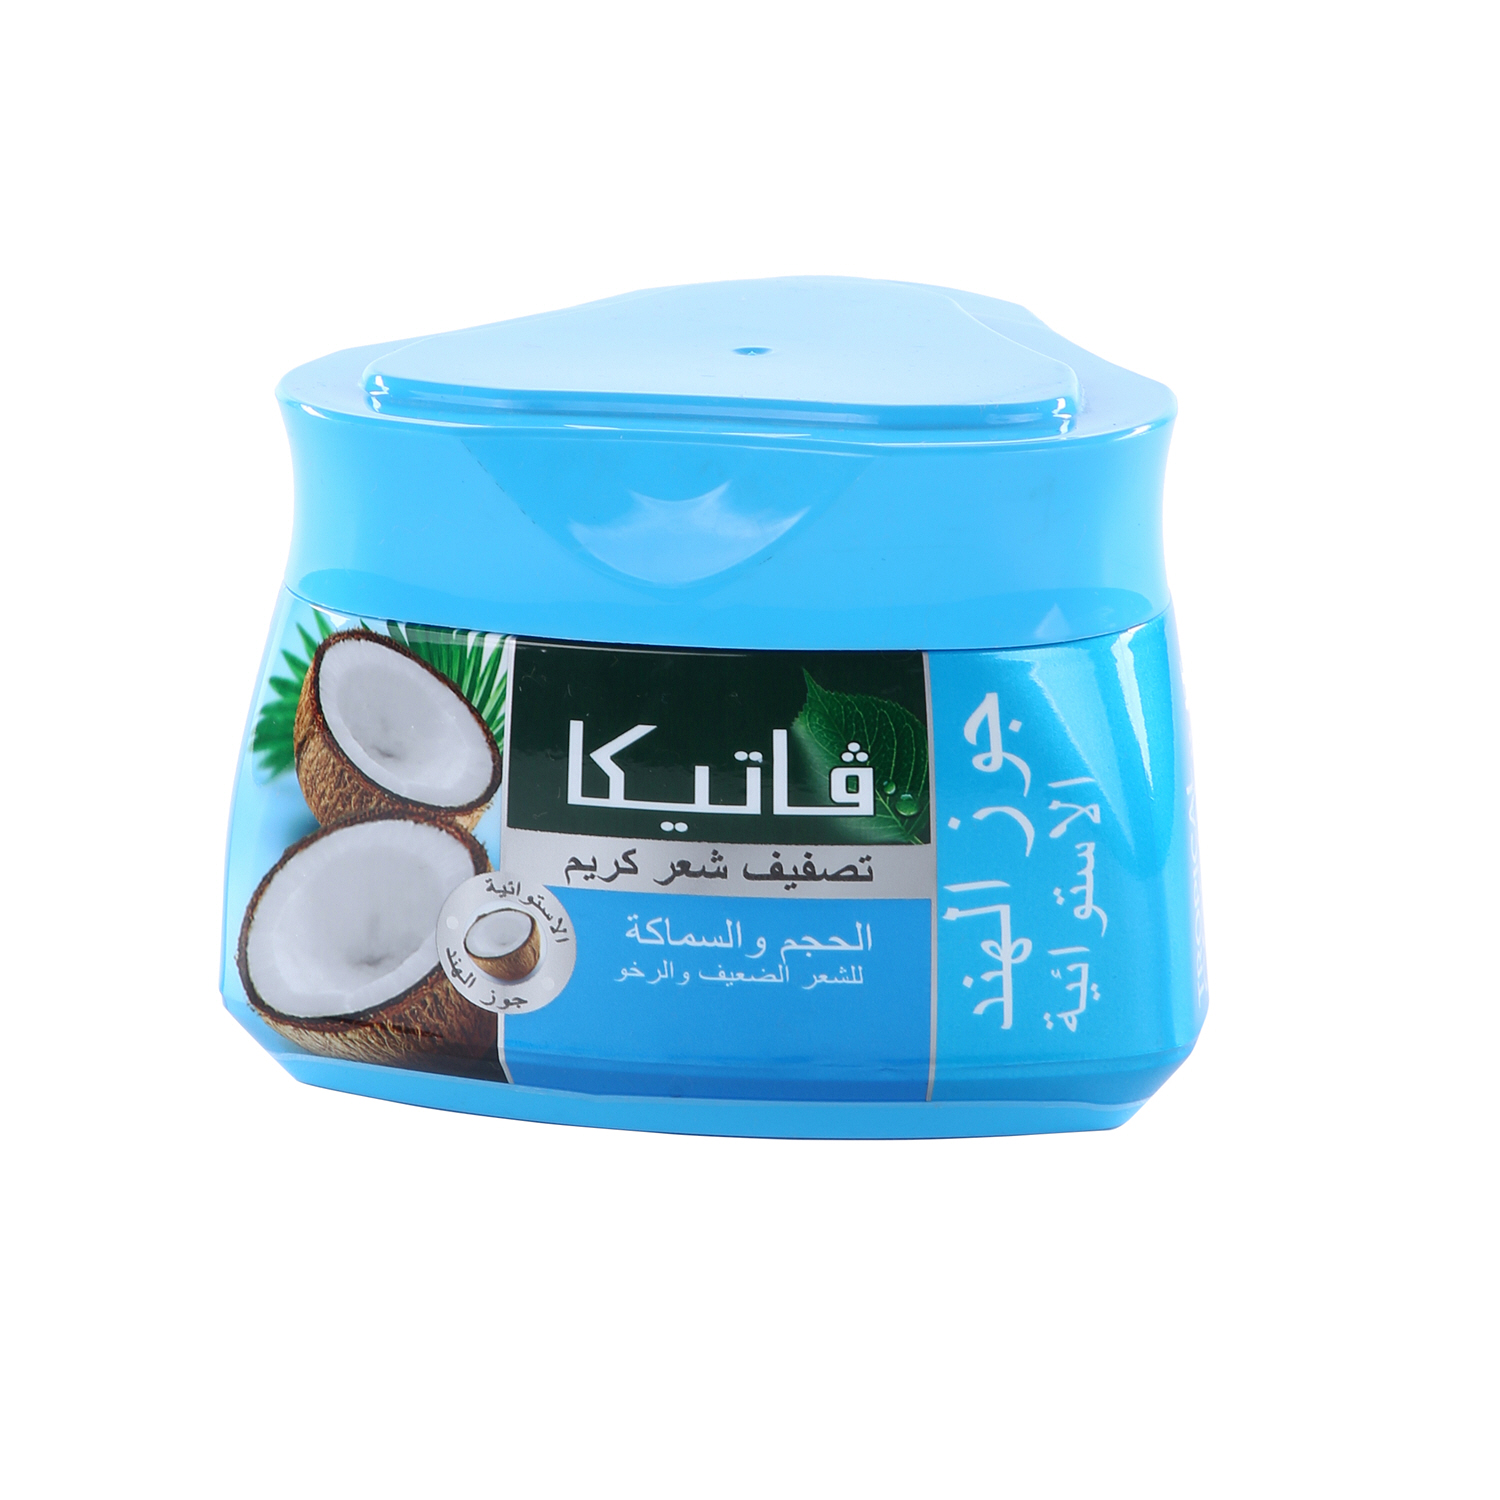 Dabur Vatika Hair Styling Cream Volume & Thickness for Weak Hair Tropical Coconut 210 ml